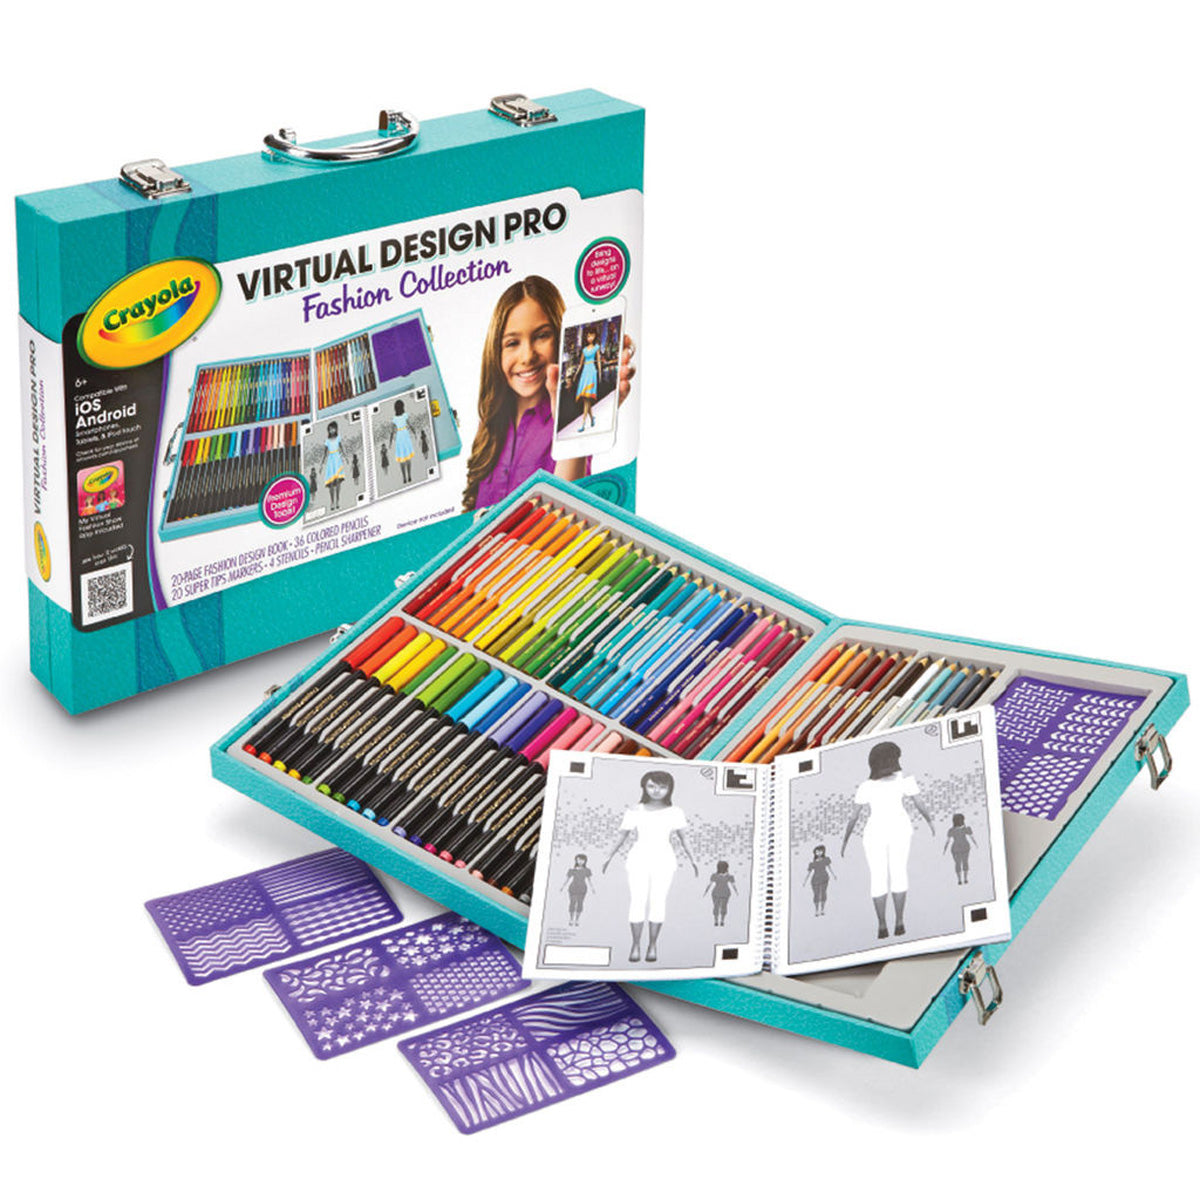 Crayola Virtual Design Pro Tray, Fashion Collection